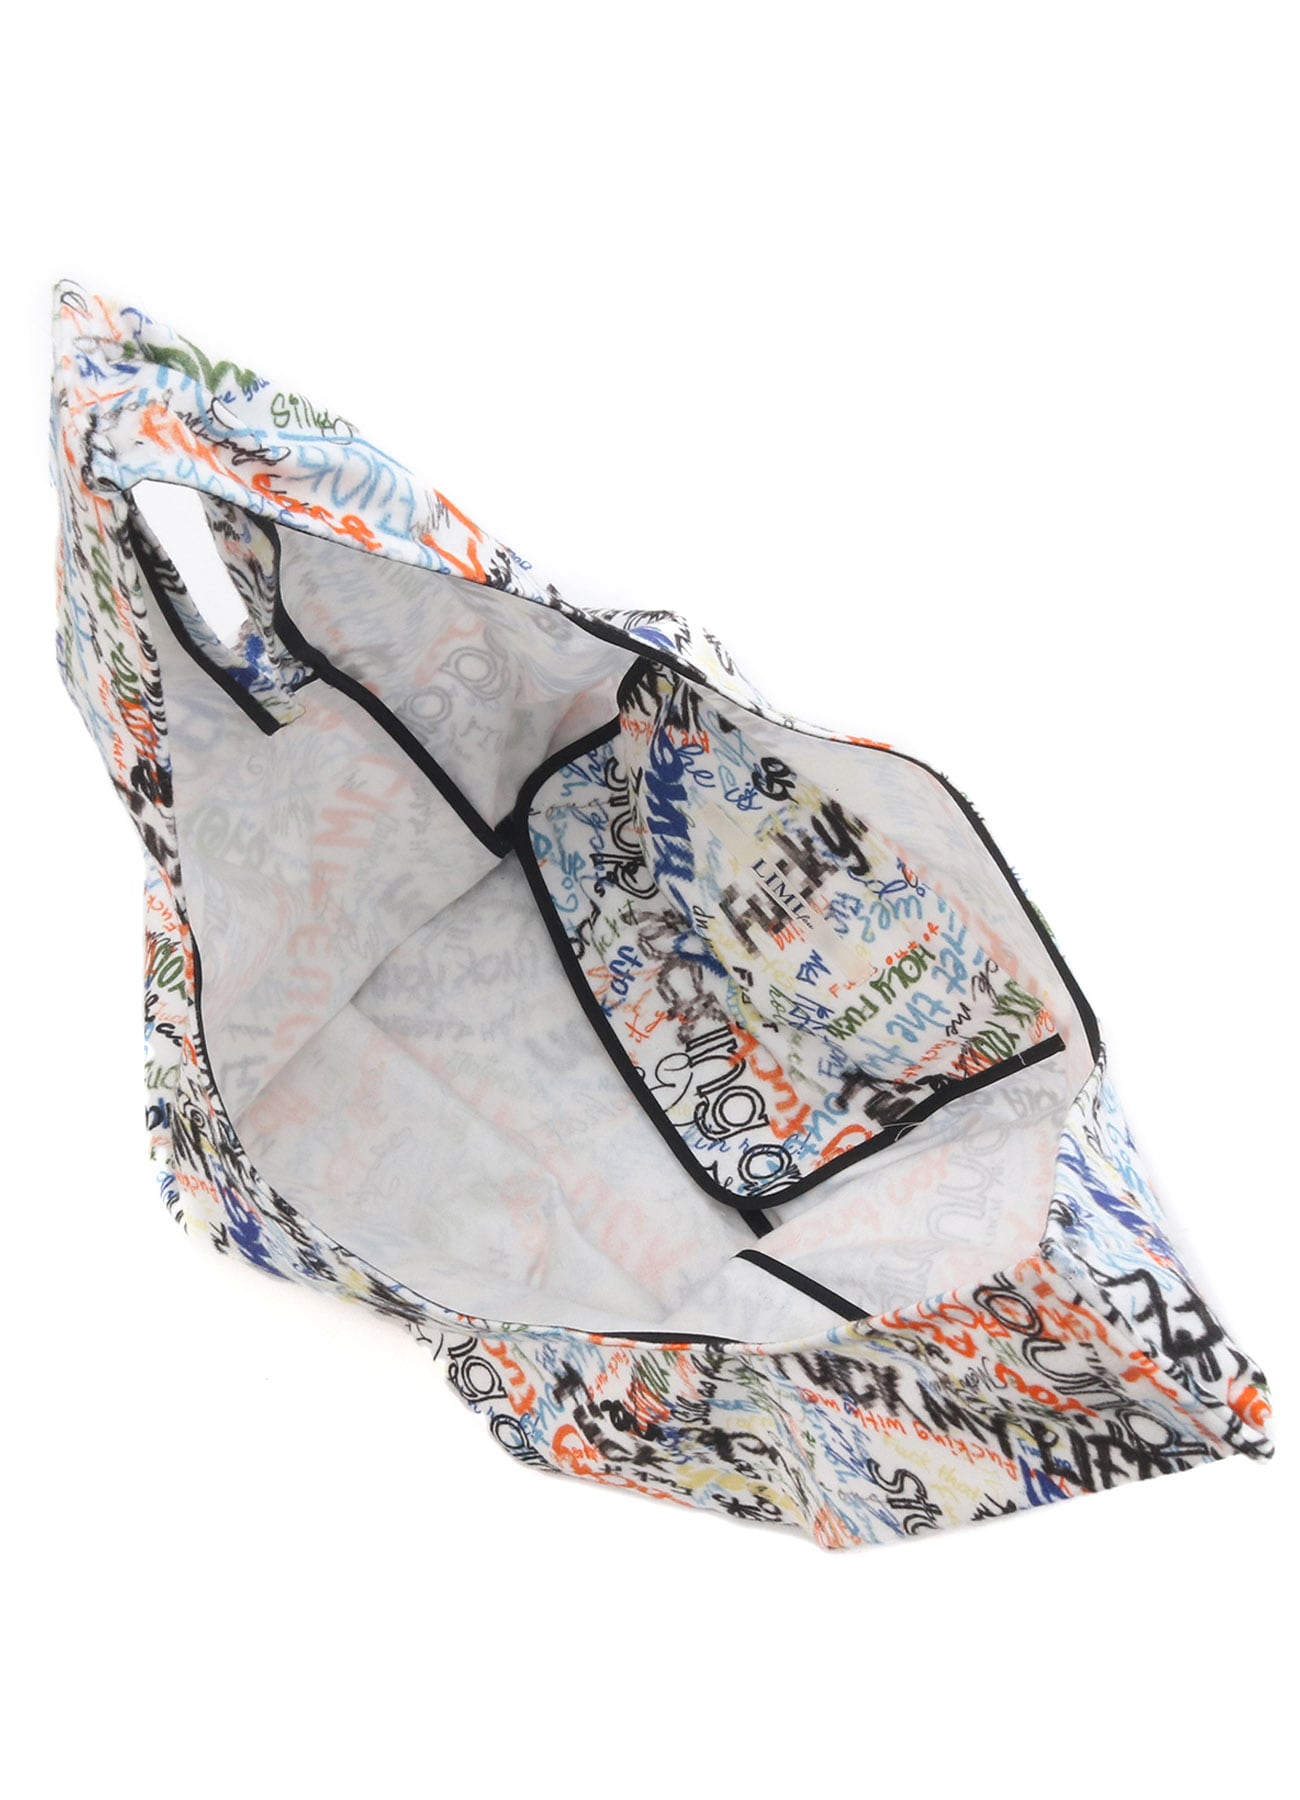 Mosaic FU*K Print Cotton Shopping Bag(FREE SIZE White): Vintage